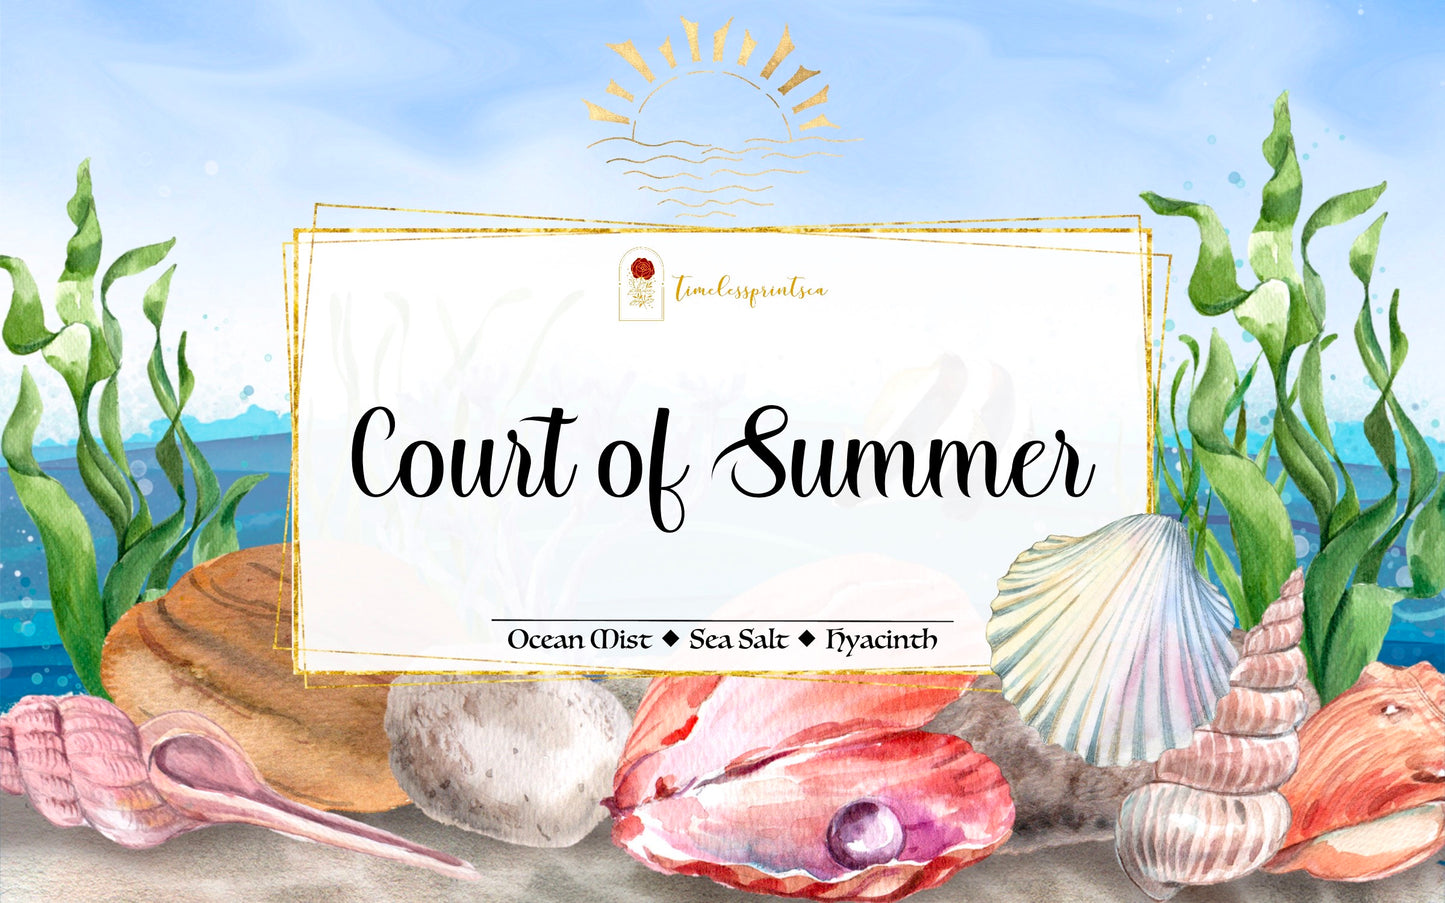 Court of Summer